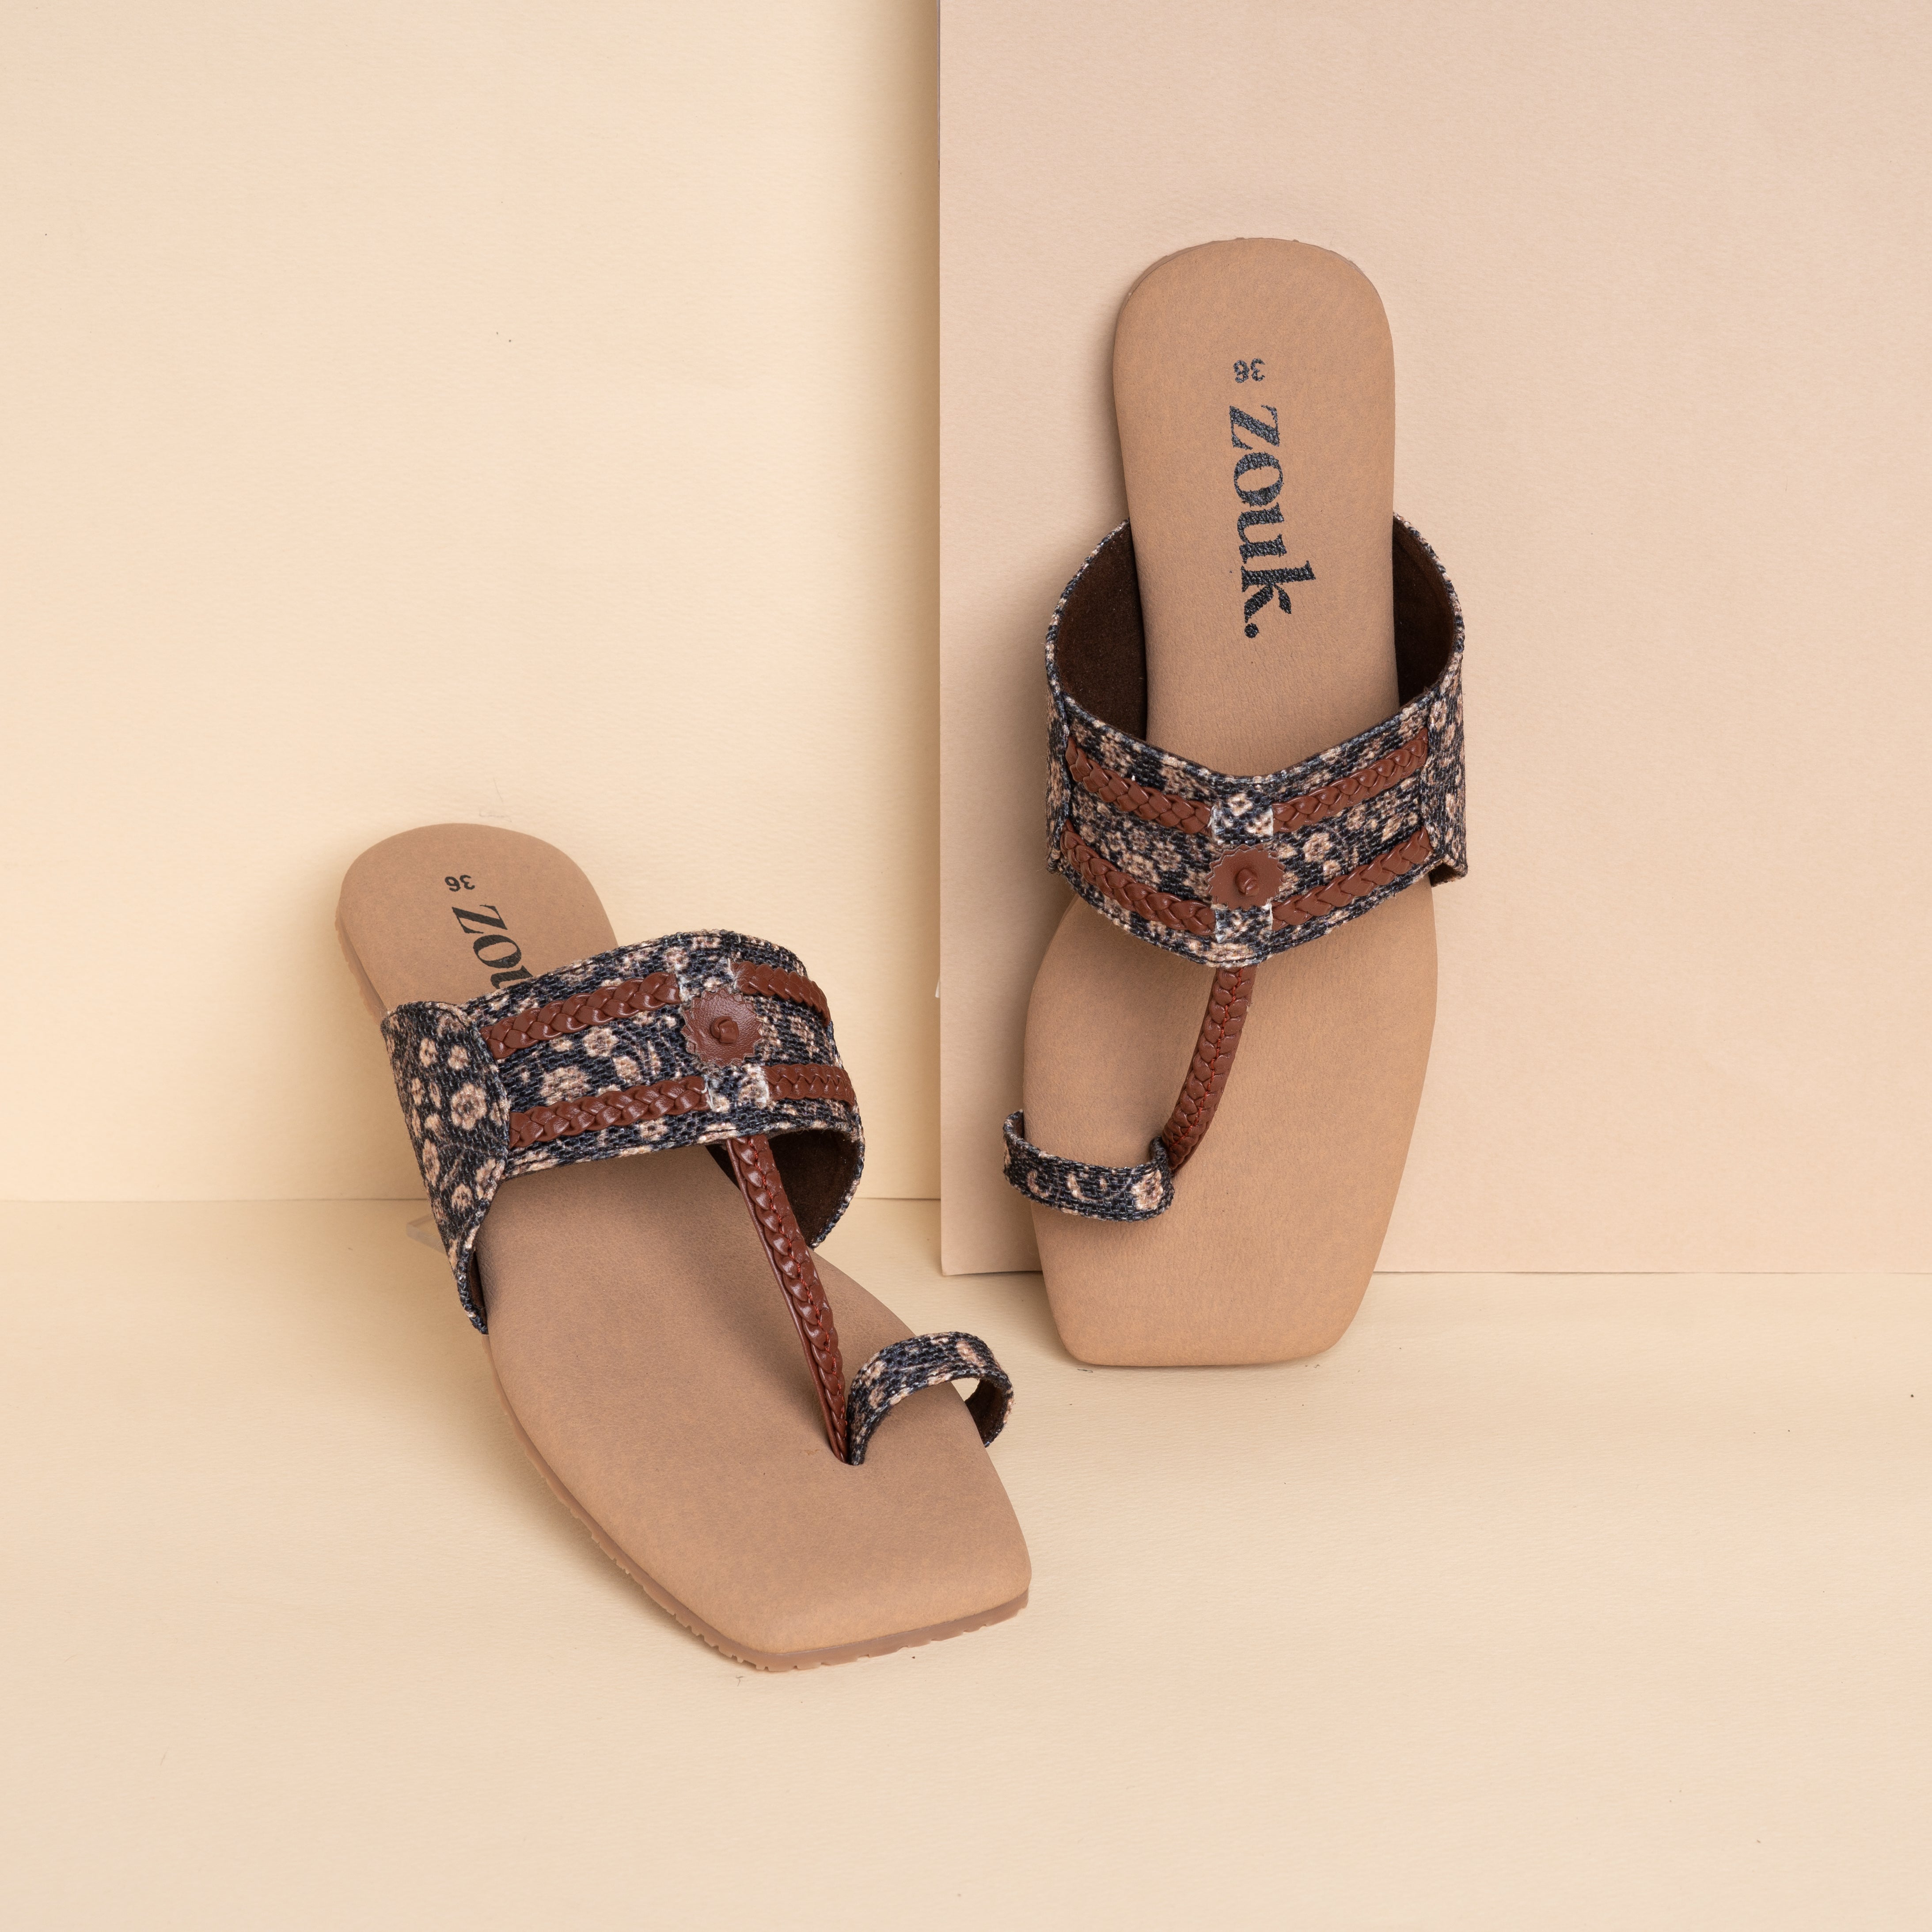 Ladies Flat Sandals Designs 2020|Girls Sandals Designs|Fancy Sandals &  Slippers For Girls - YouTube